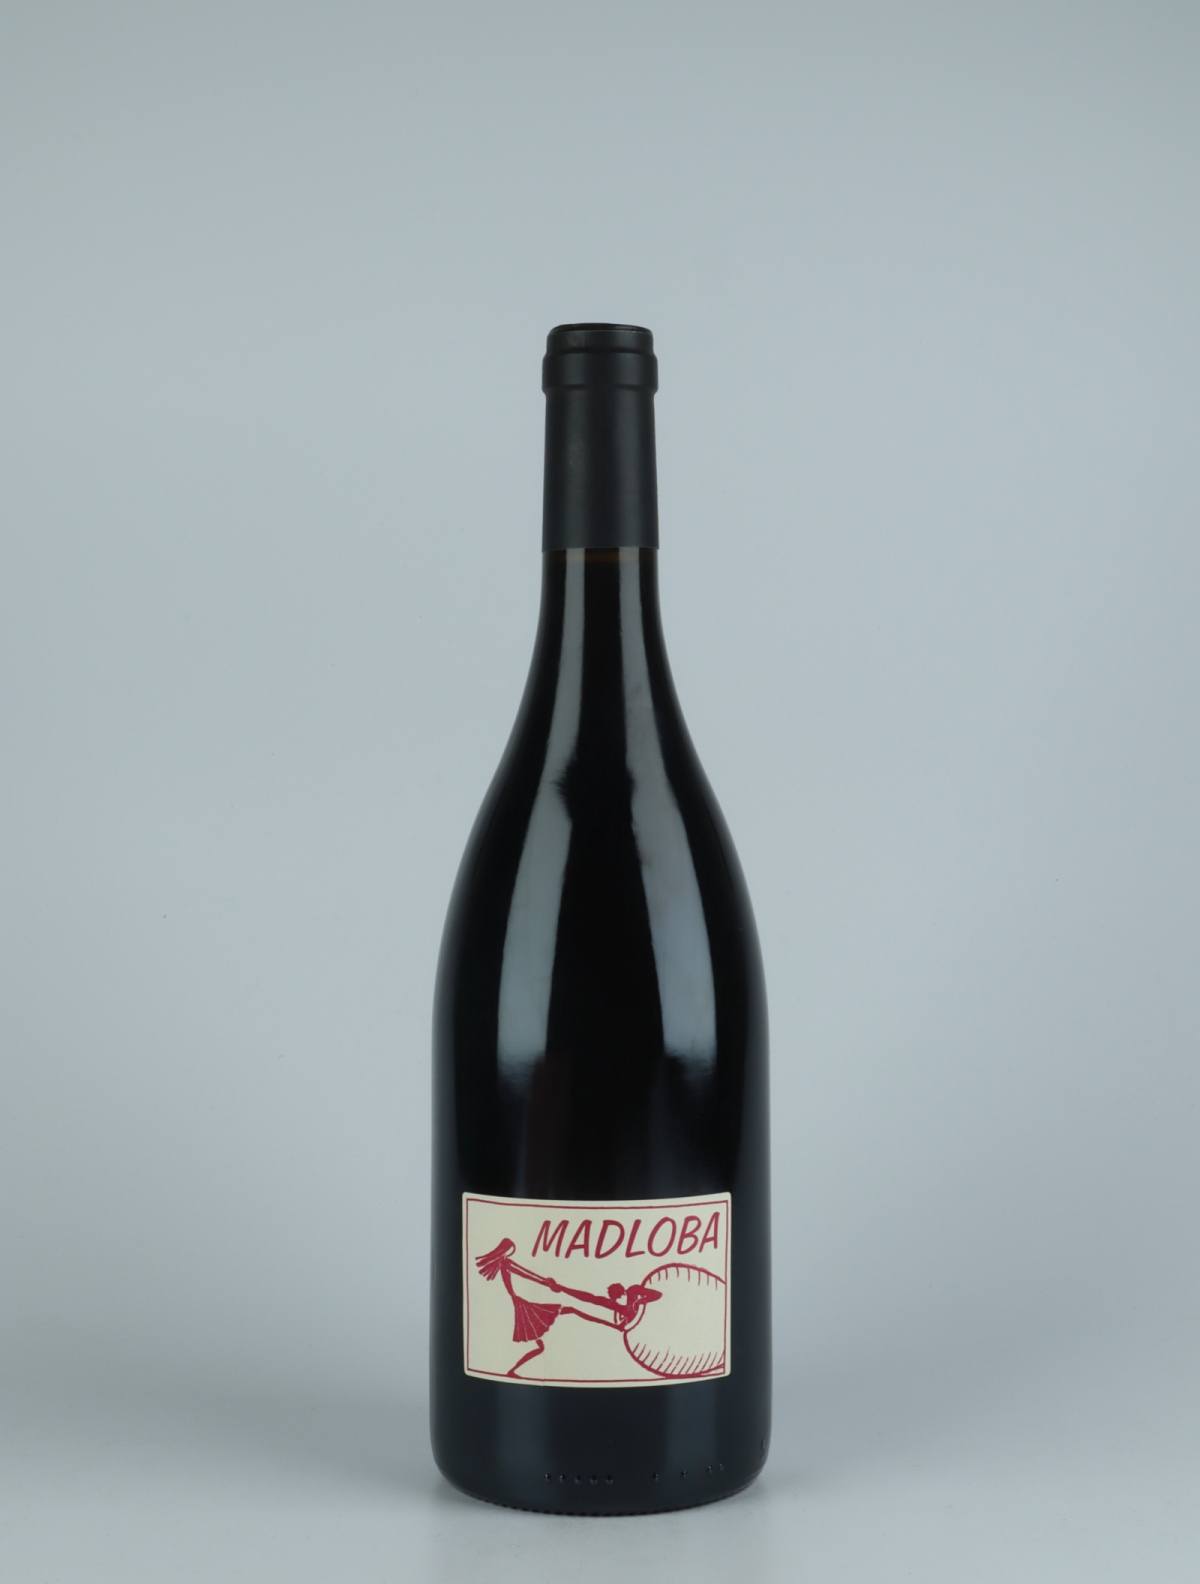 A bottle 2019 Saint-Joseph Madloba Red wine from Domaine des Miquettes, Rhône in France